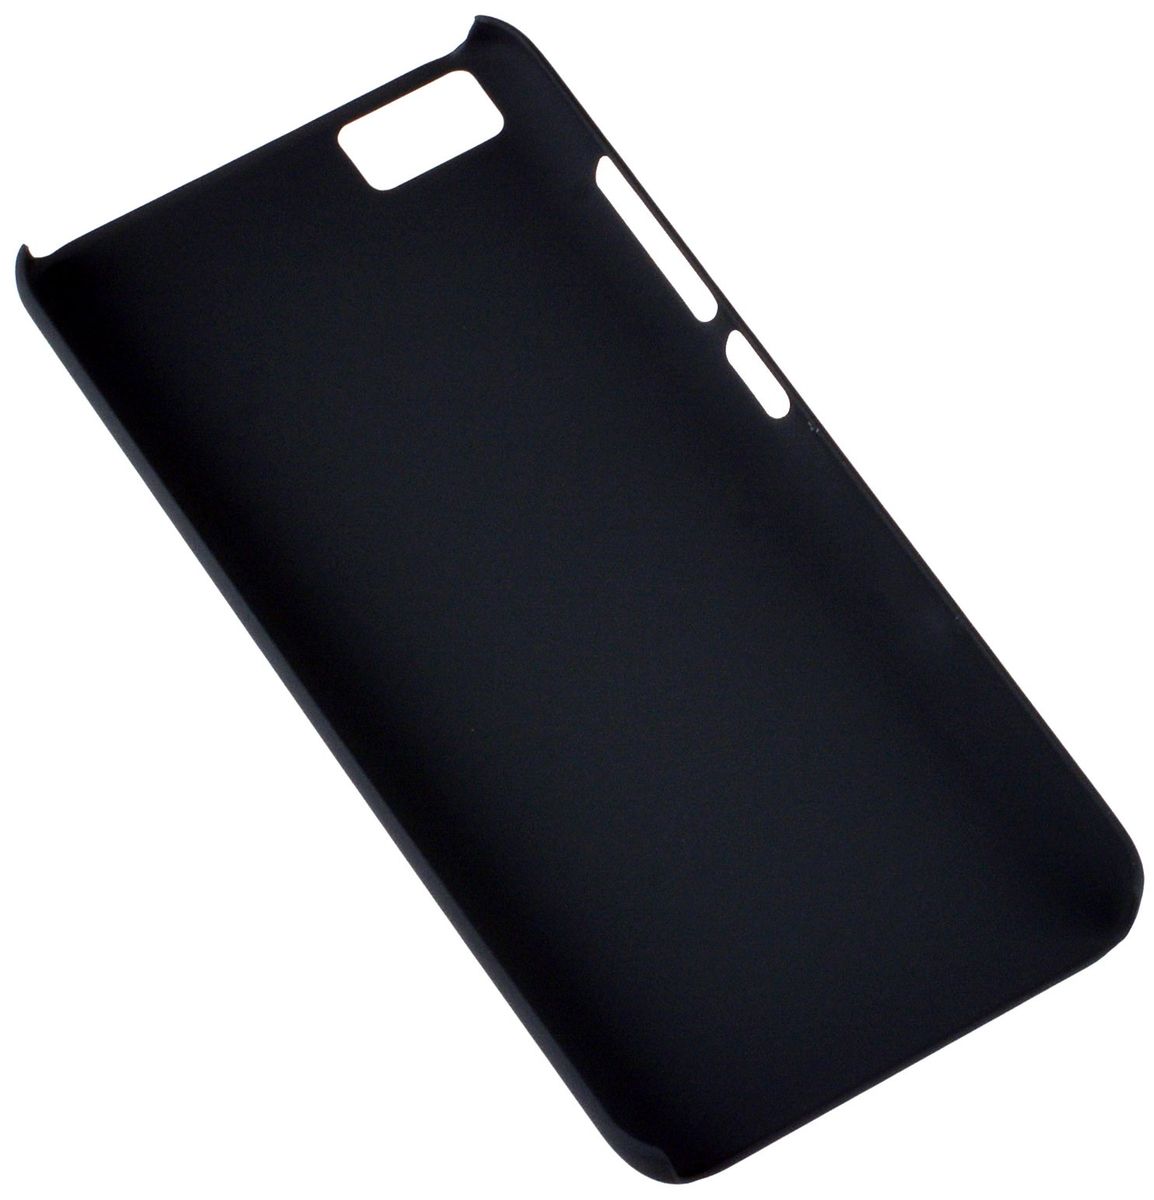 Skinbox Shield case 4People   Xiaomi Mi5, Black